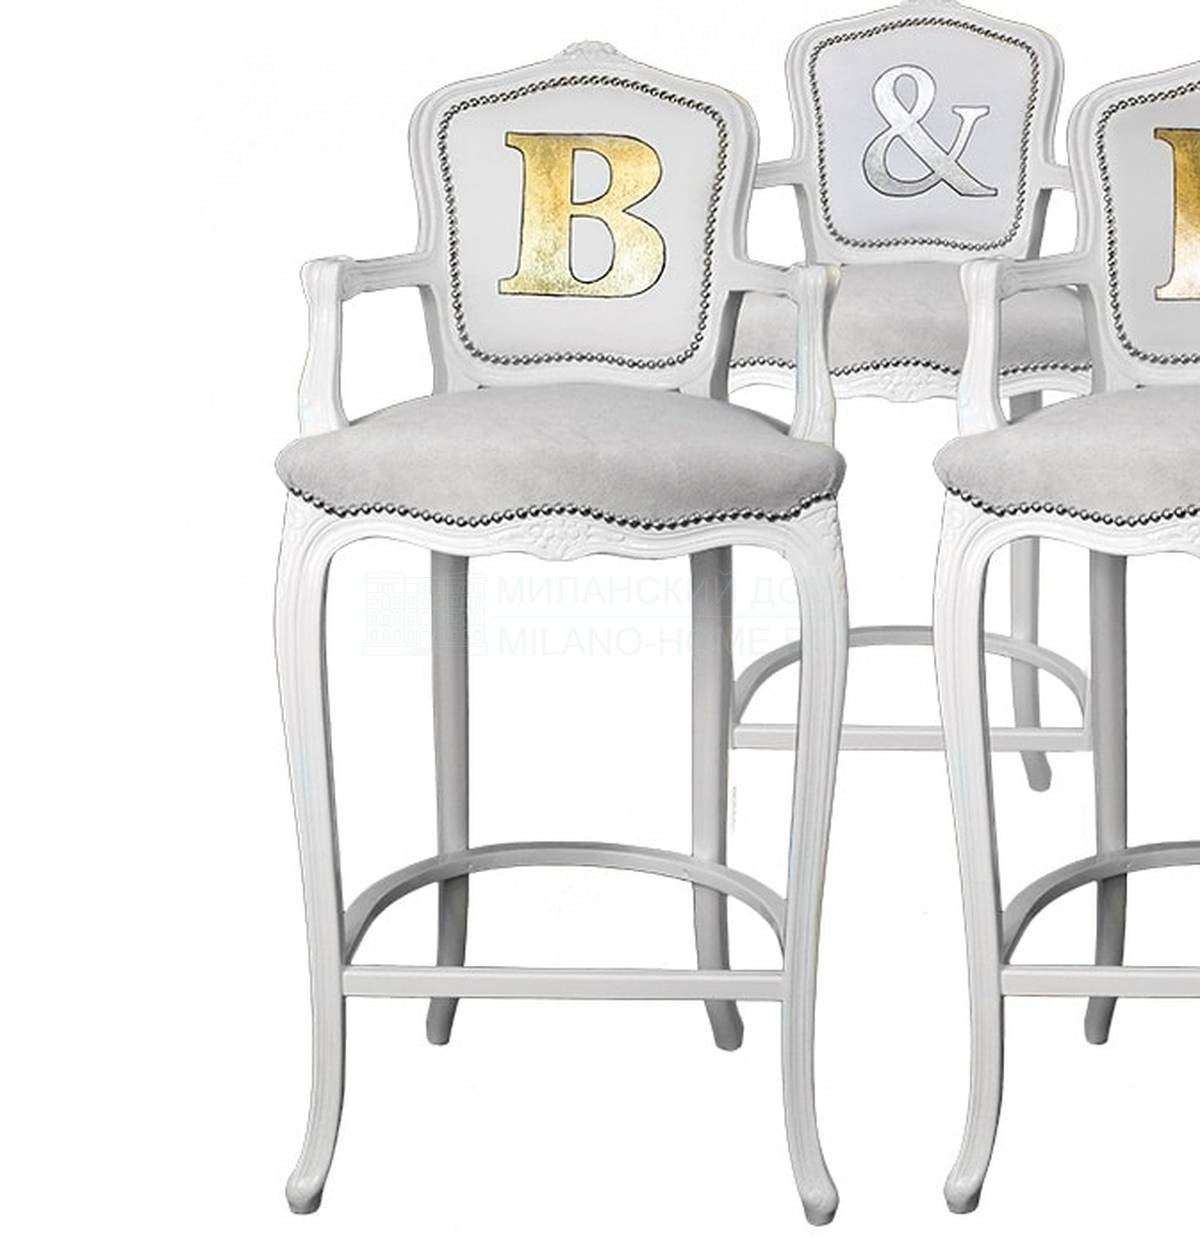 Барный стул B&H stools 4142 из Великобритании фабрики JIMMIE MARTIN